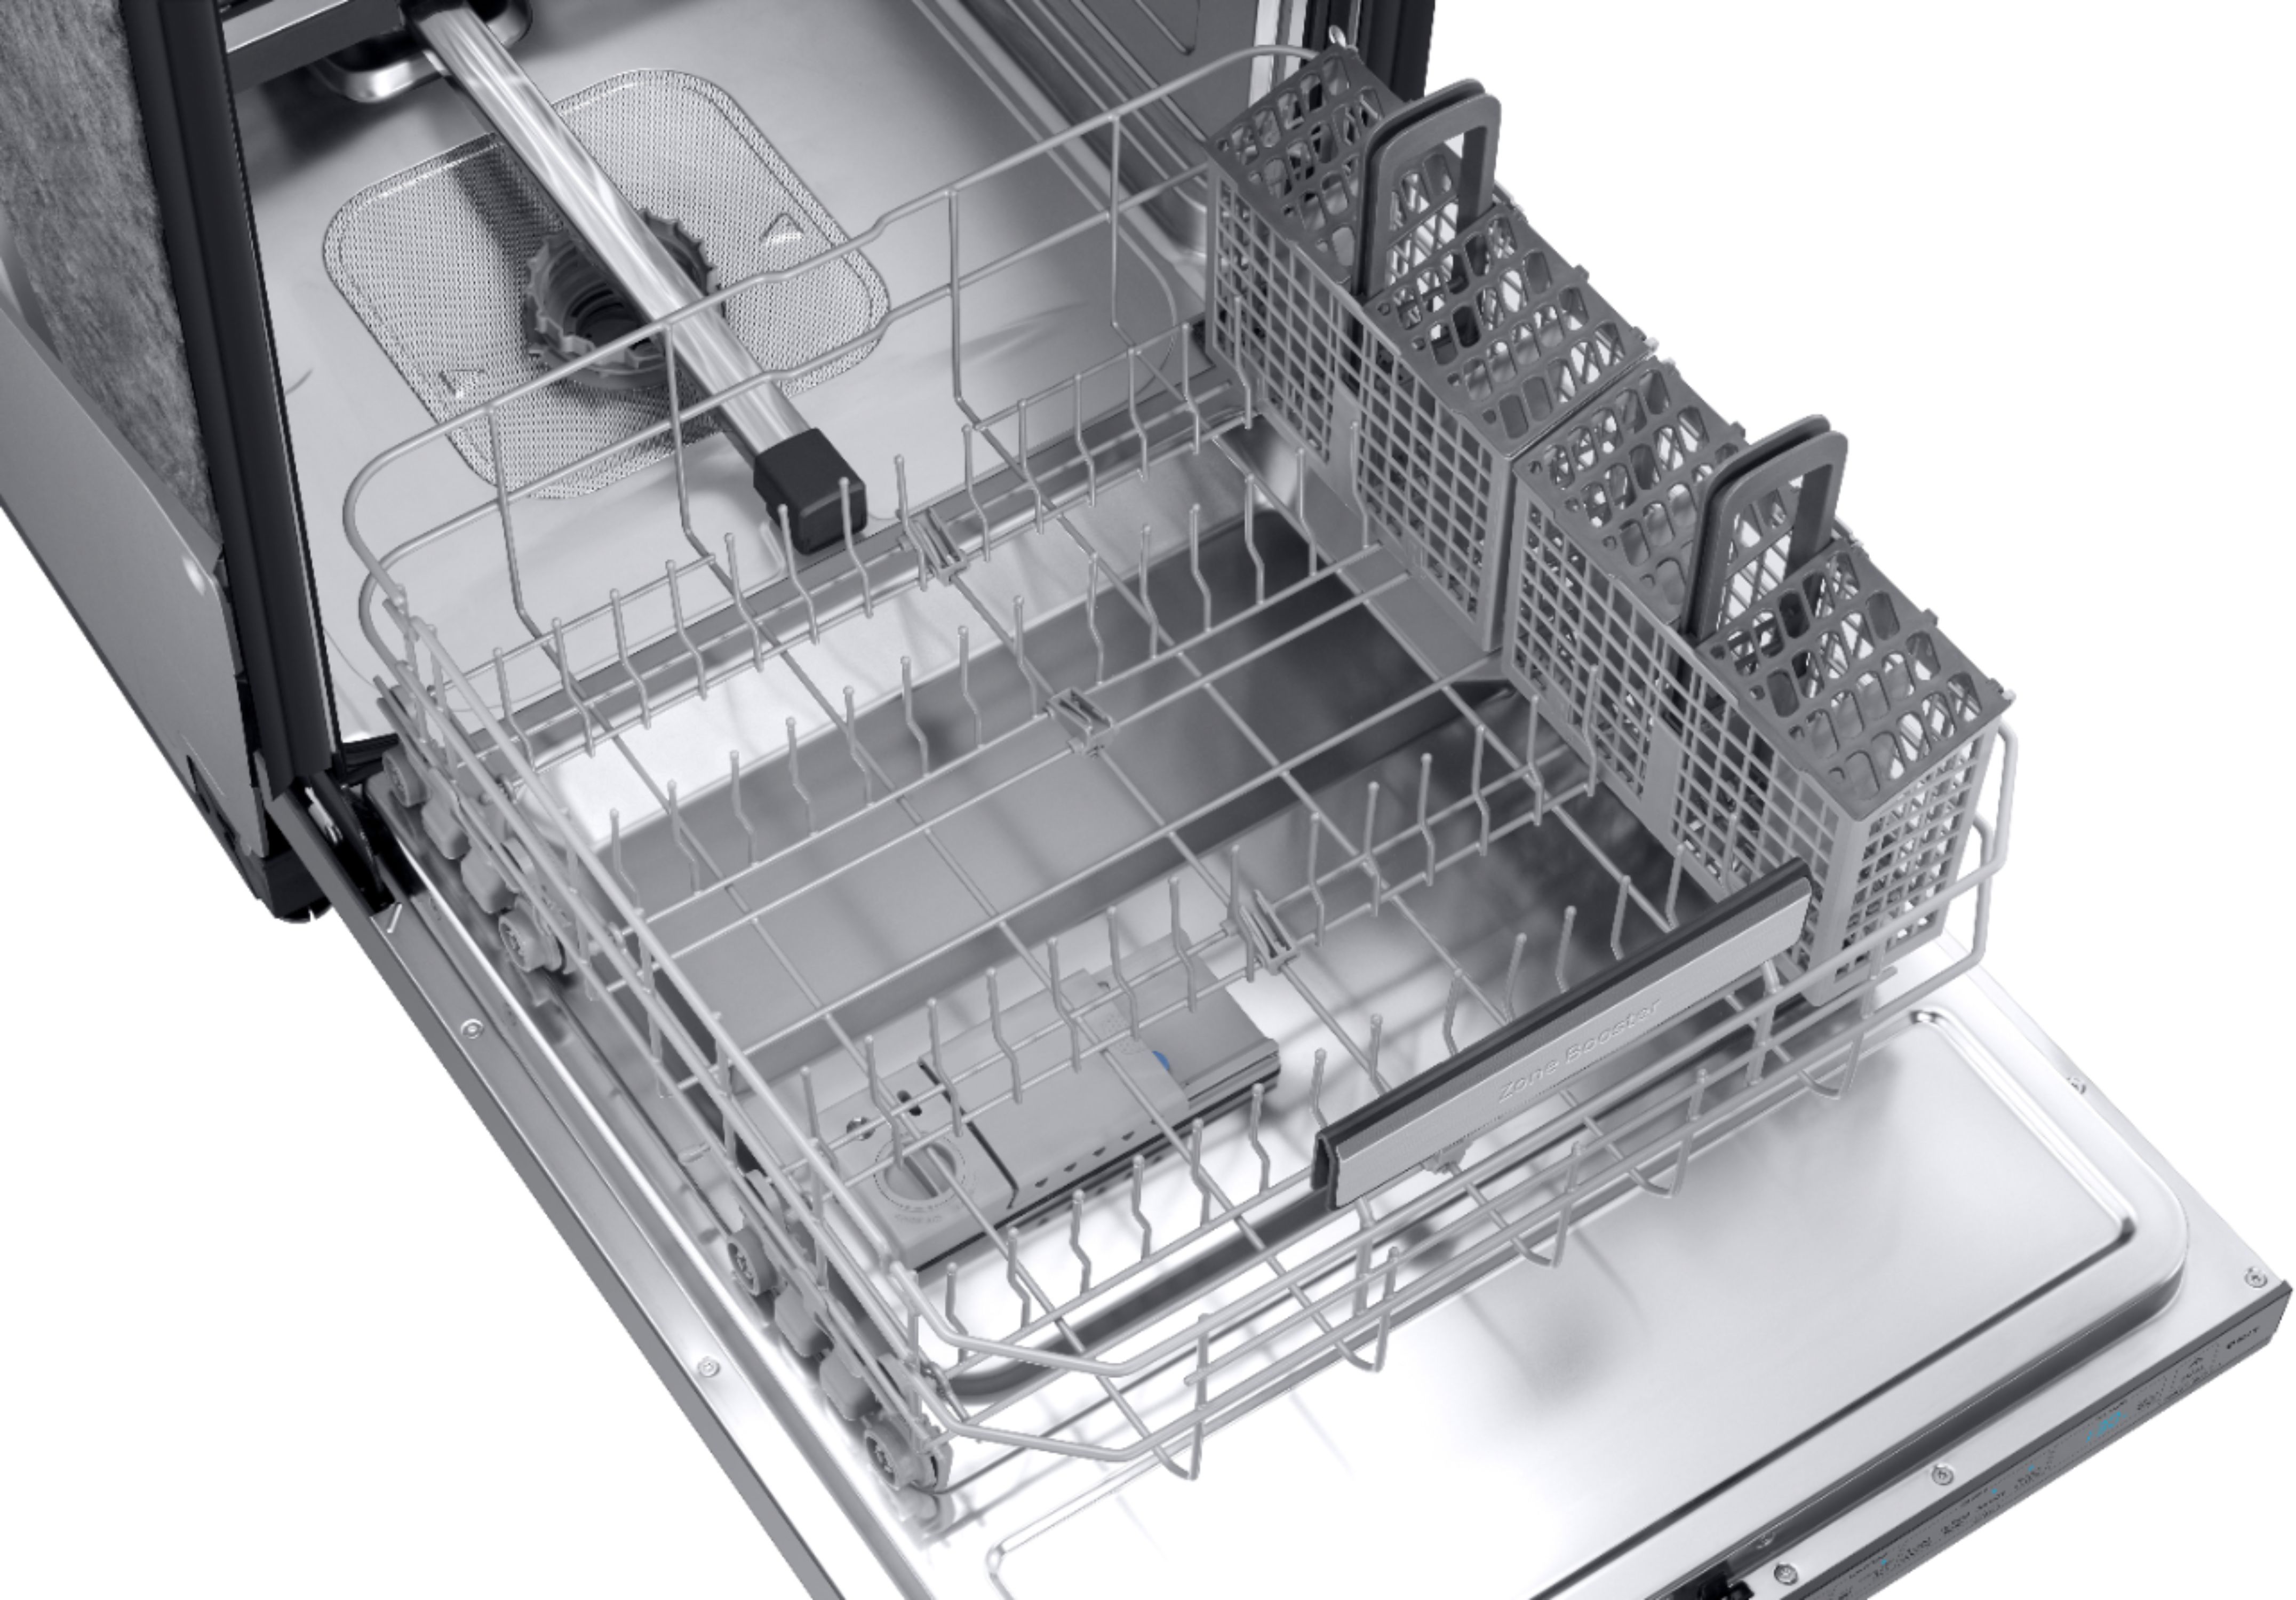 Samsung Dishwashers Sanitation and Waste Appliances - DW80R9950